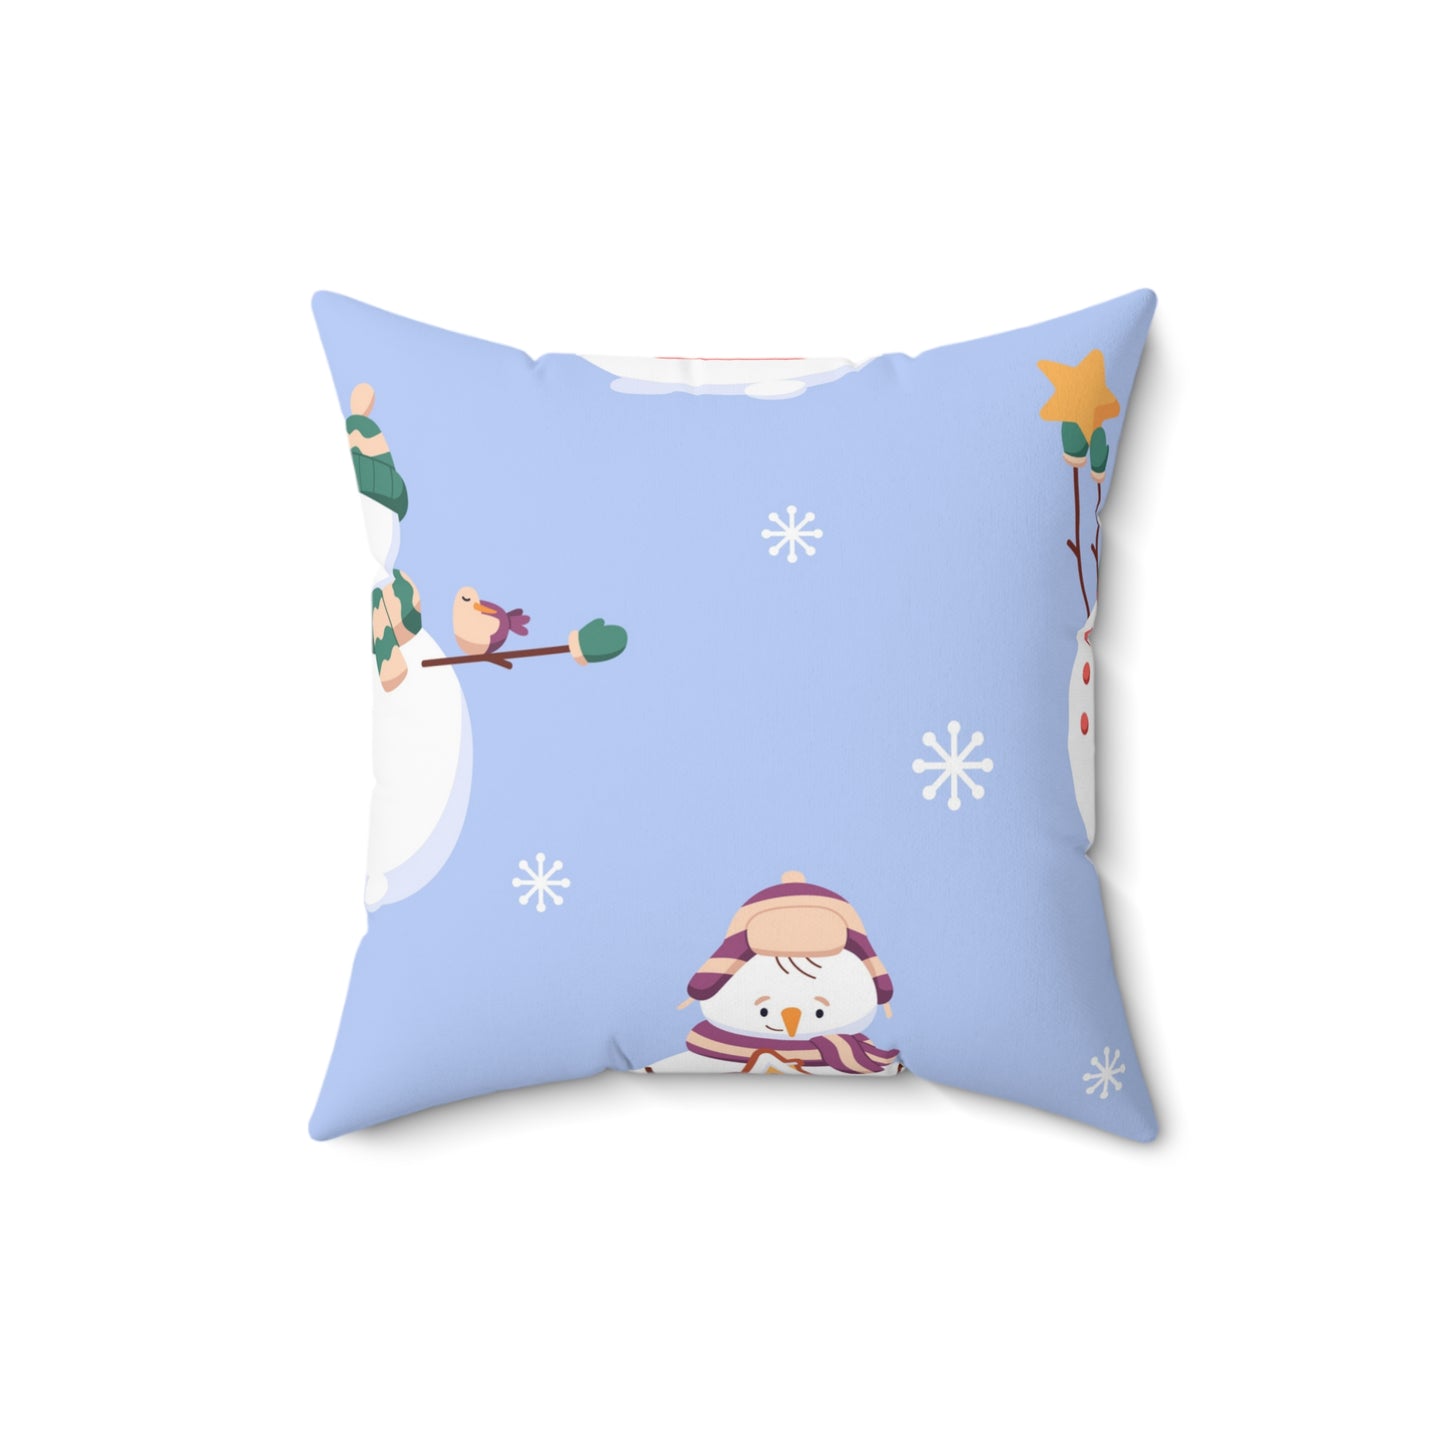 Jolly Snowman Square Pillow